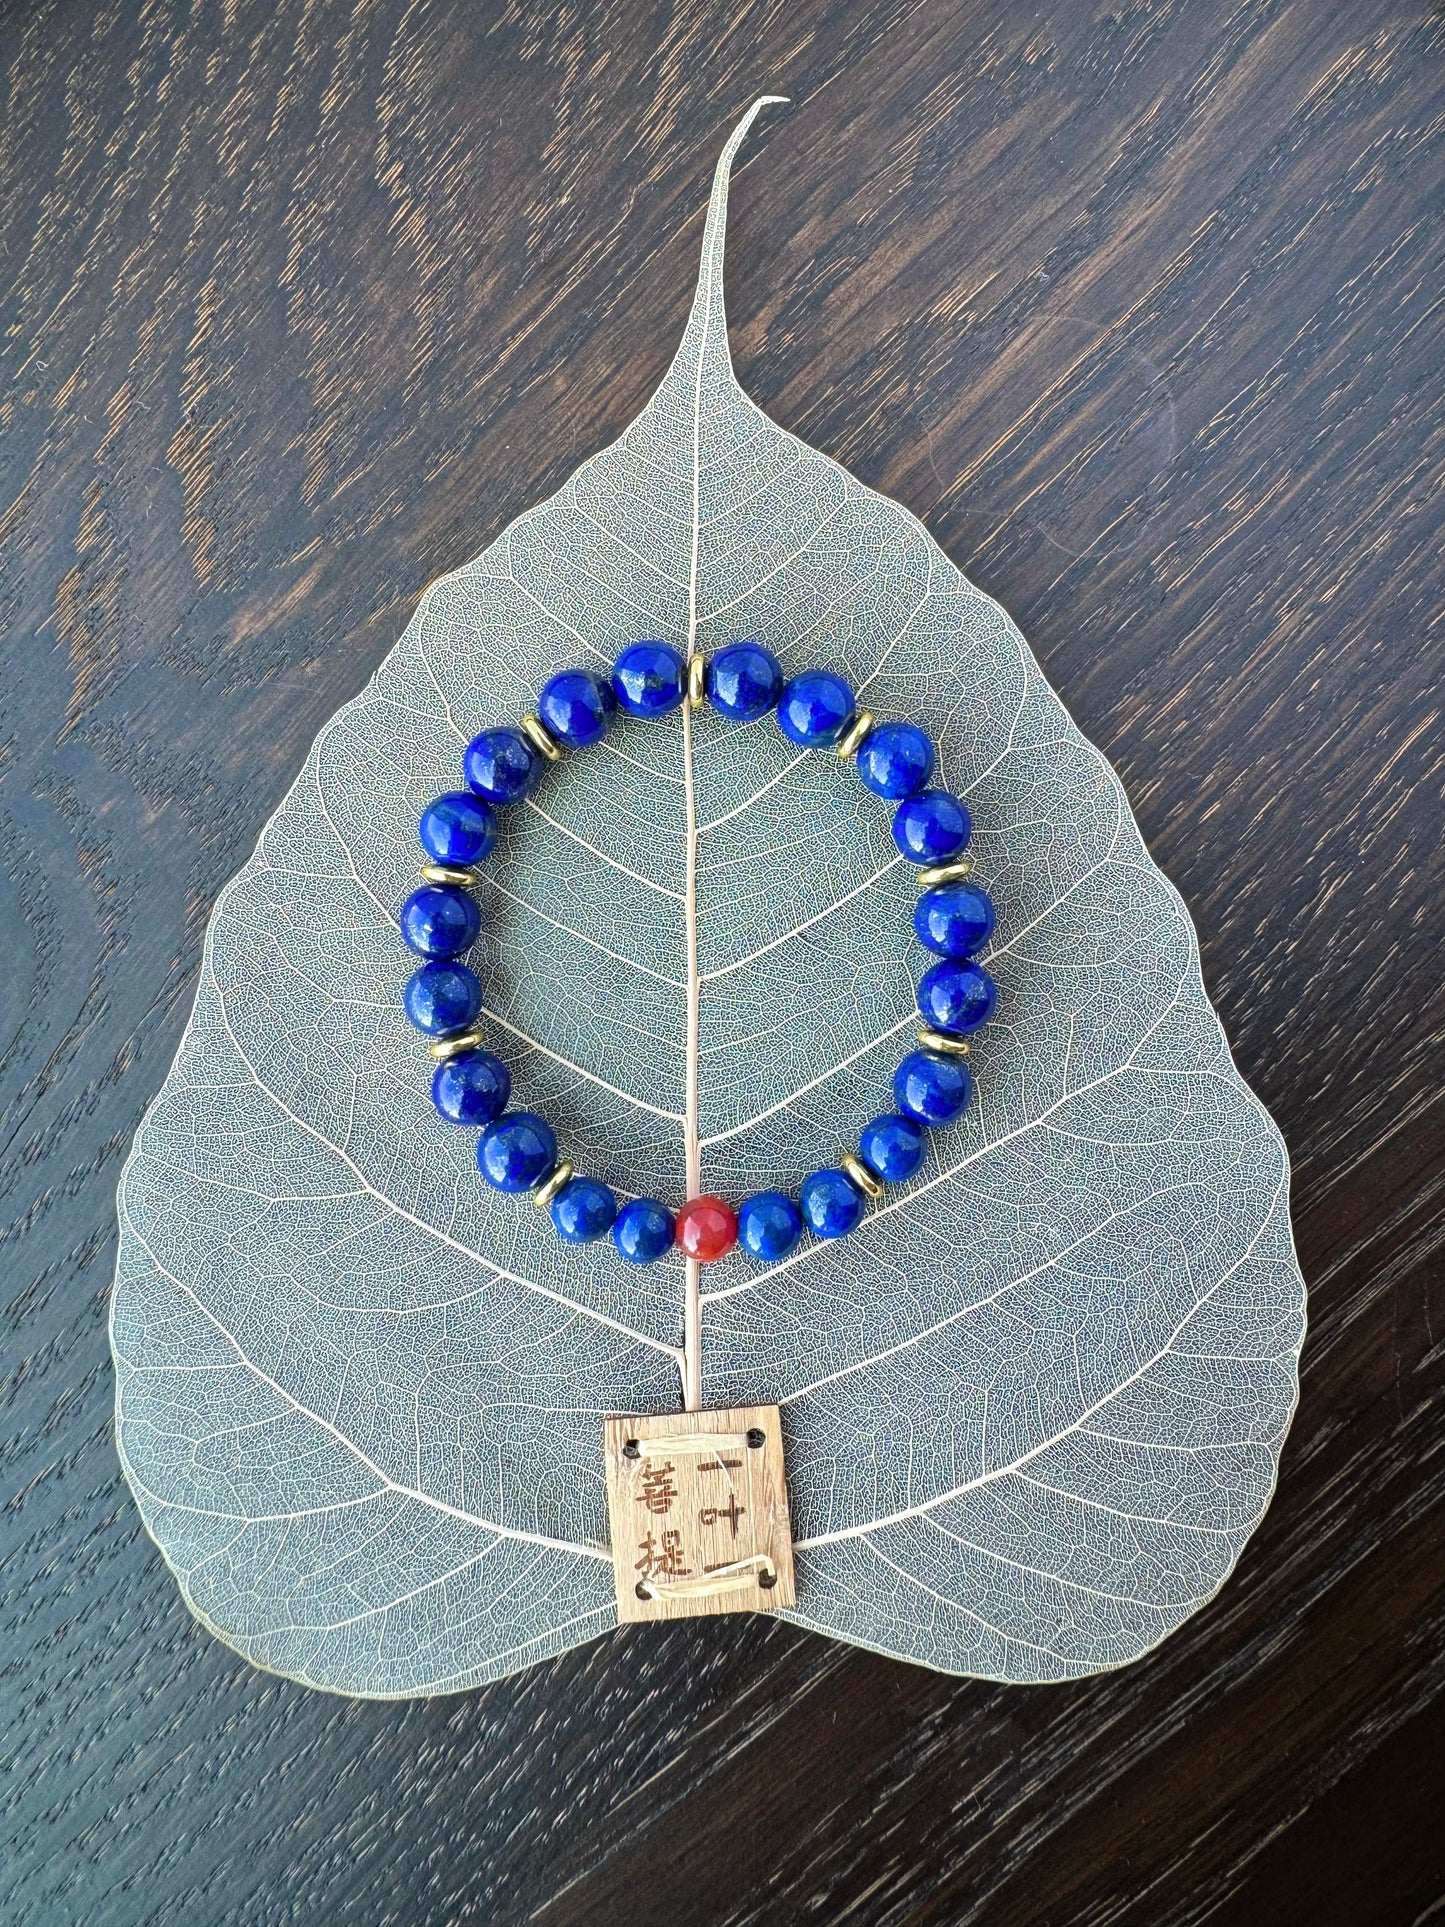 Arrival of cranes guidance, healing Lapis lazuli bracelet